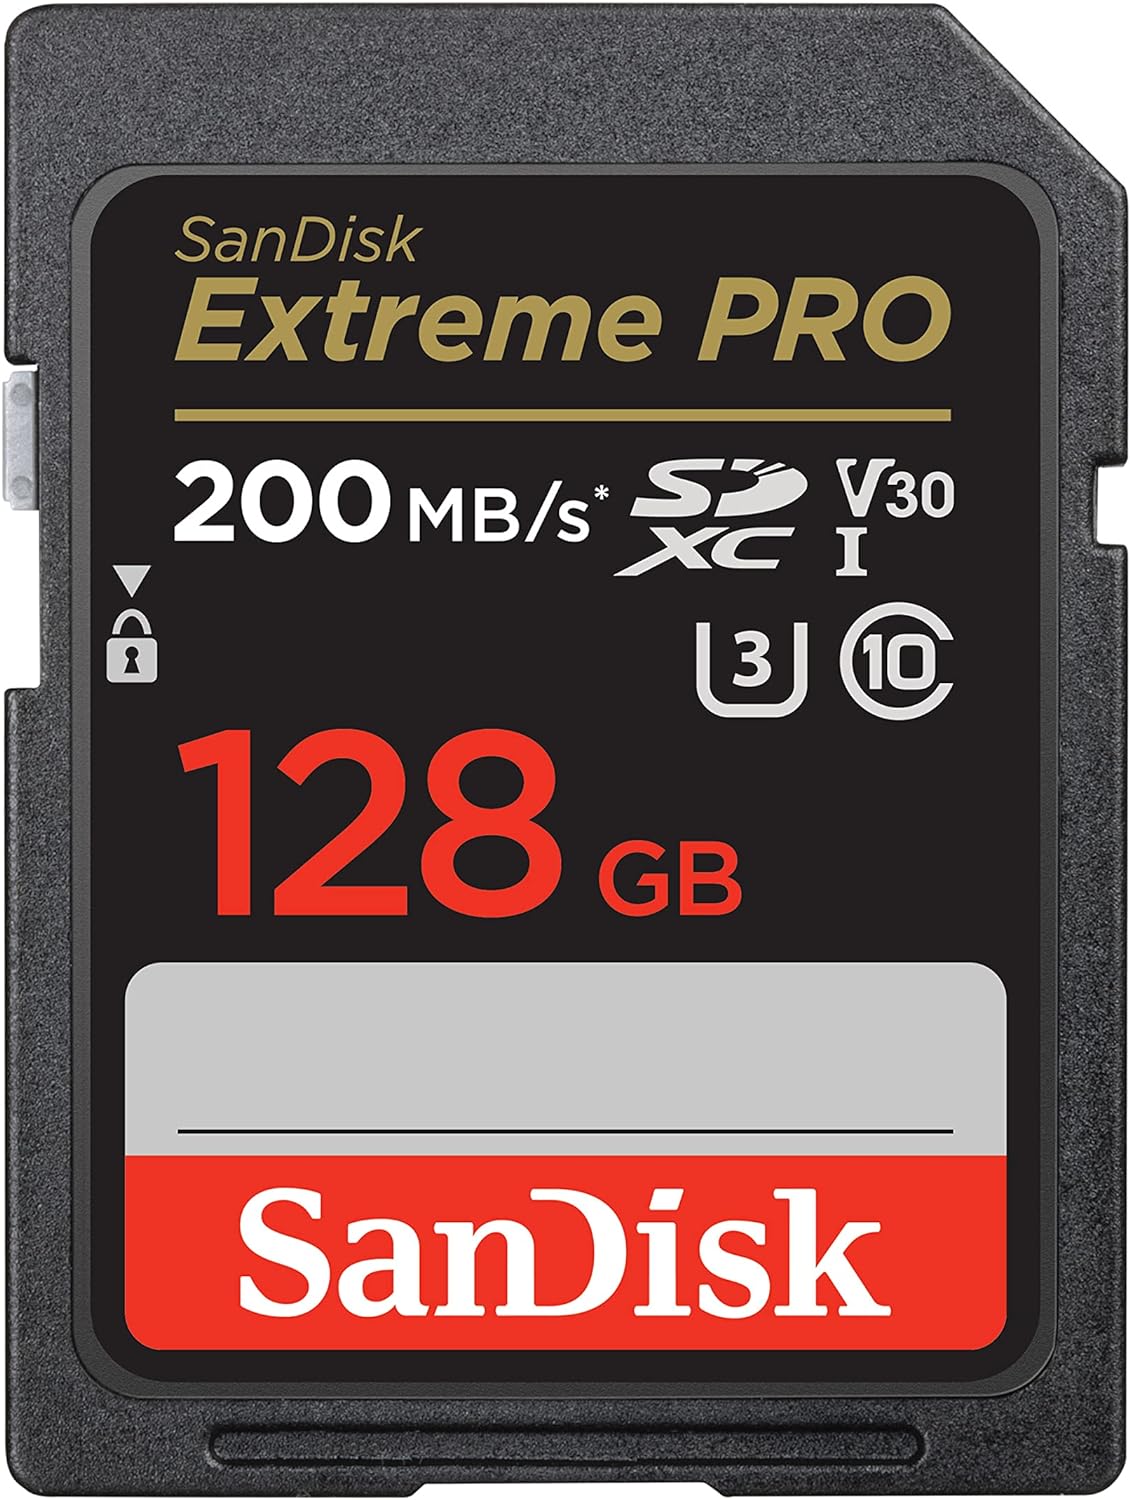 SanDisk 128GB Extreme PRO SDXC UHS-I Memory Card - C10, U3, V30, 4K UHD, SD Card - SDSDXXD-128G-GN4IN $21.99